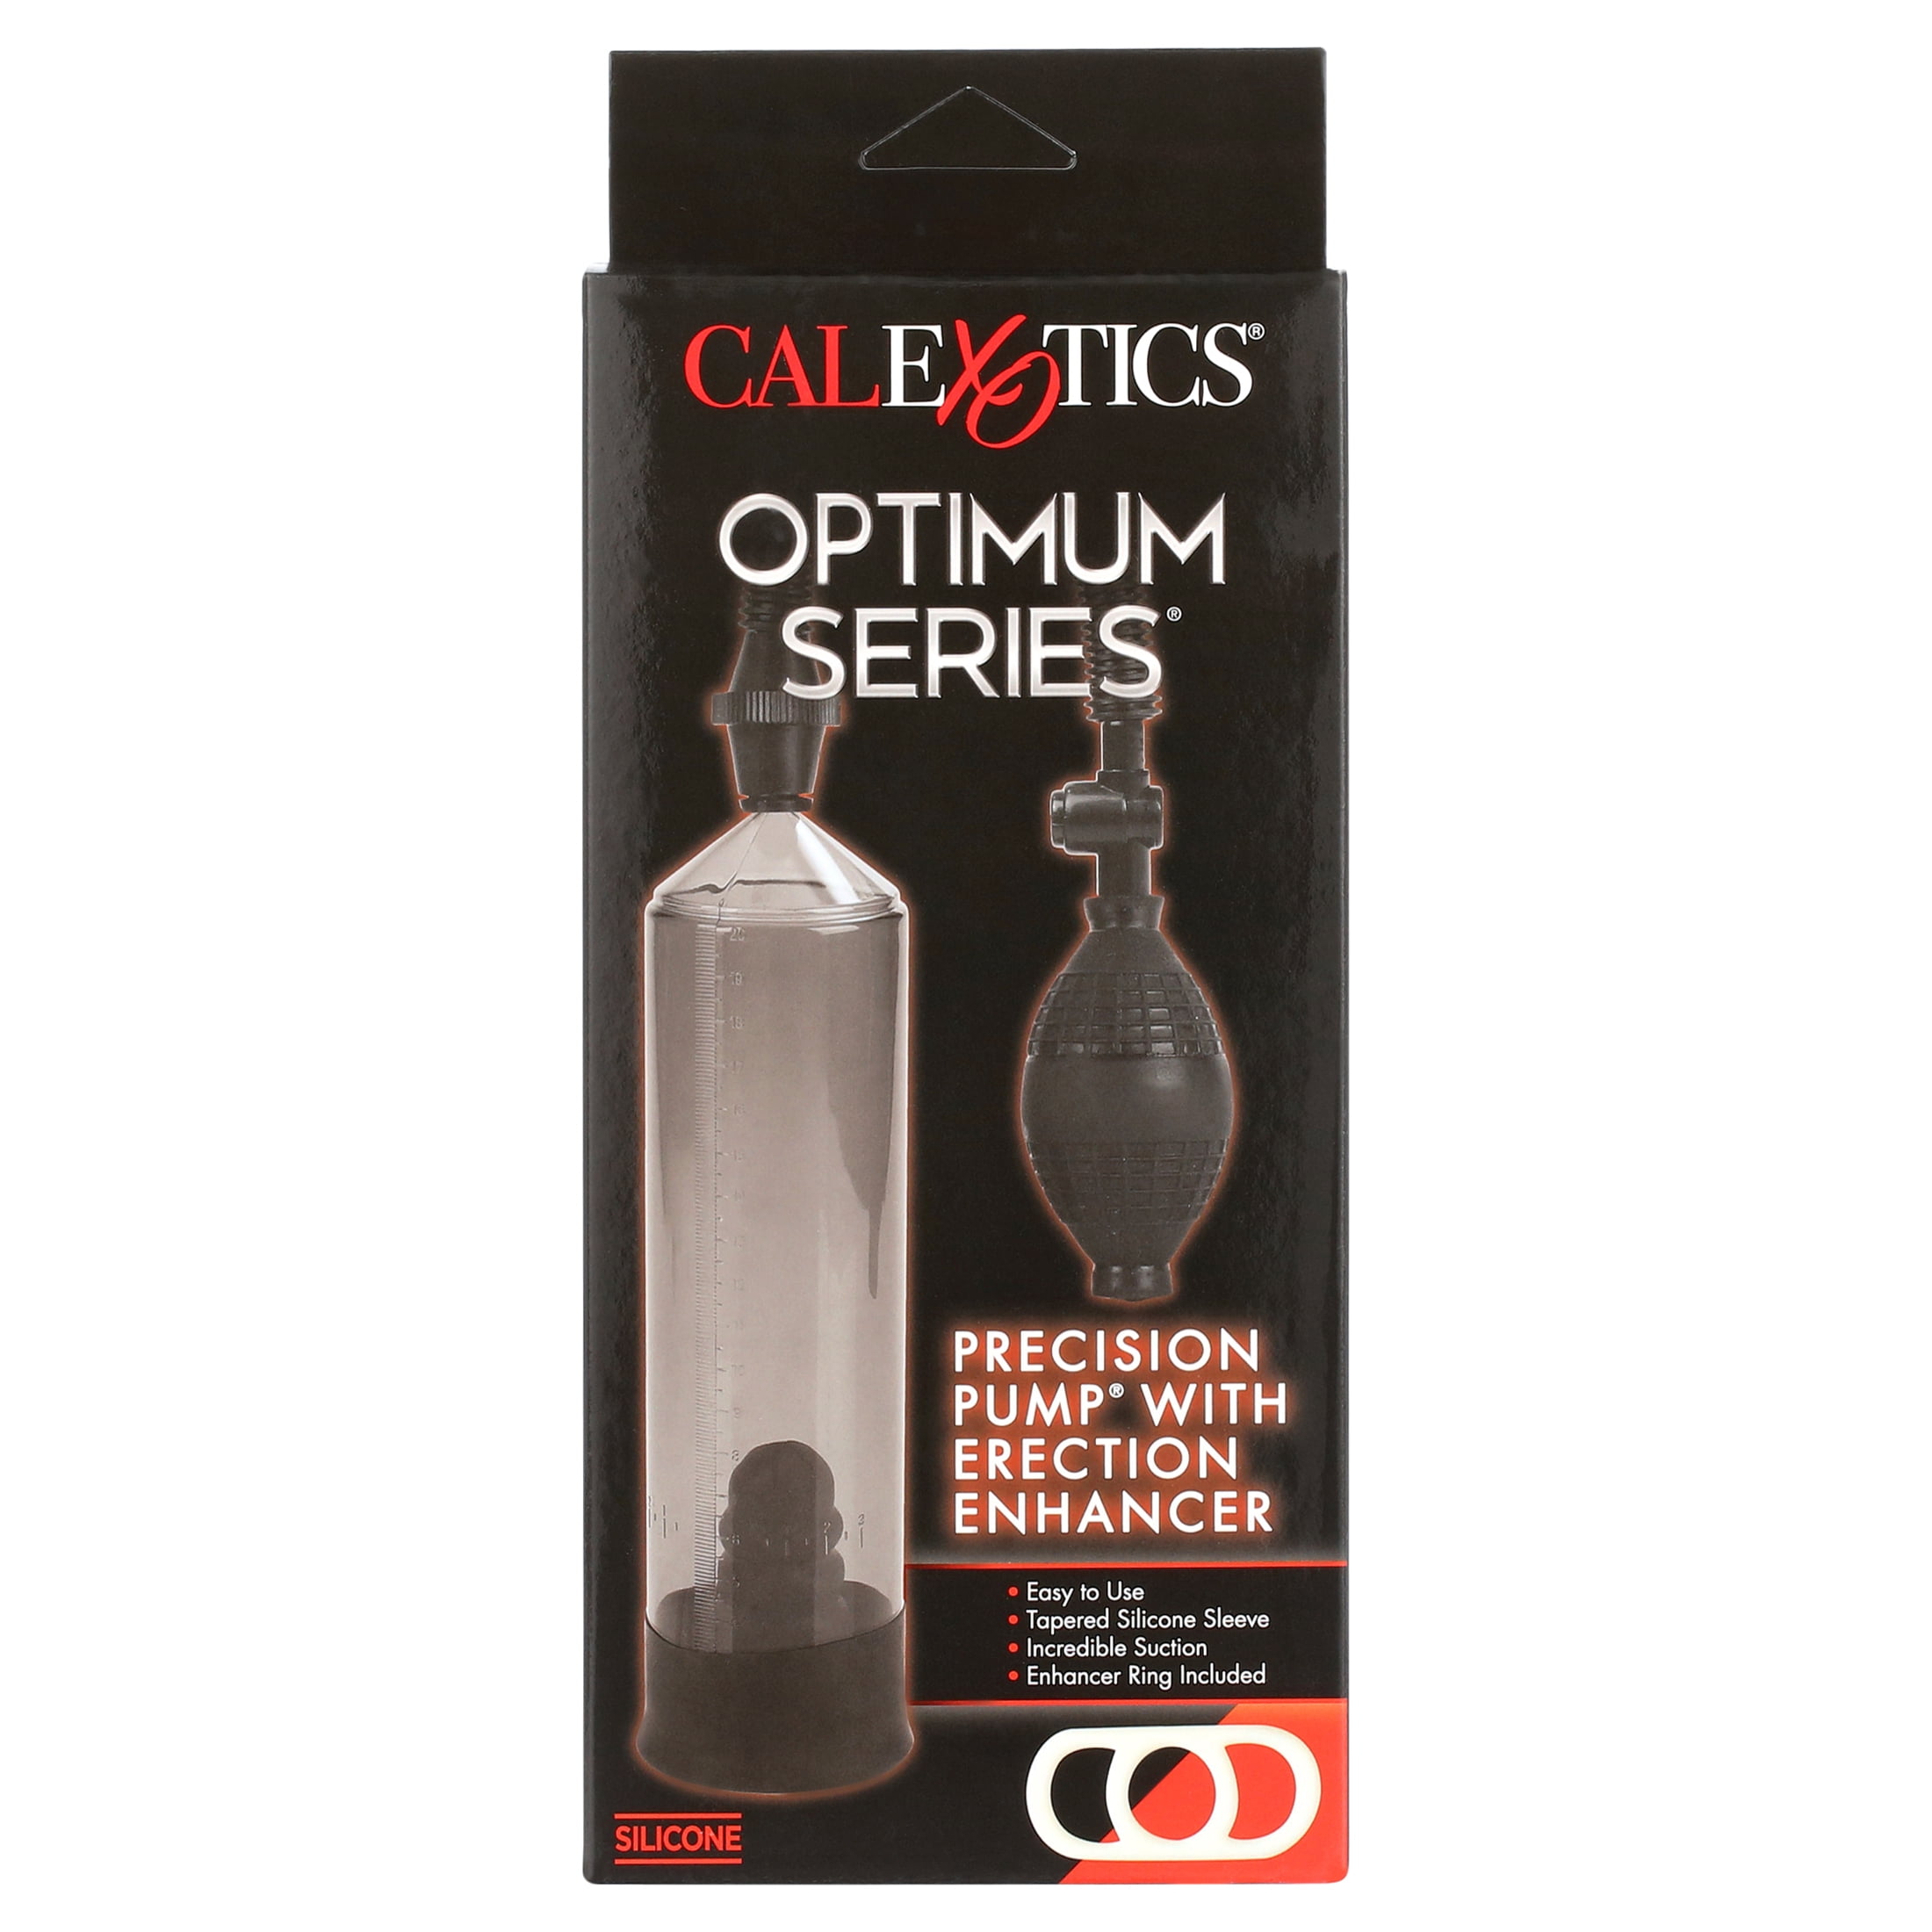 CalExotics Precision Penis Pump With Erection Enhancer image image